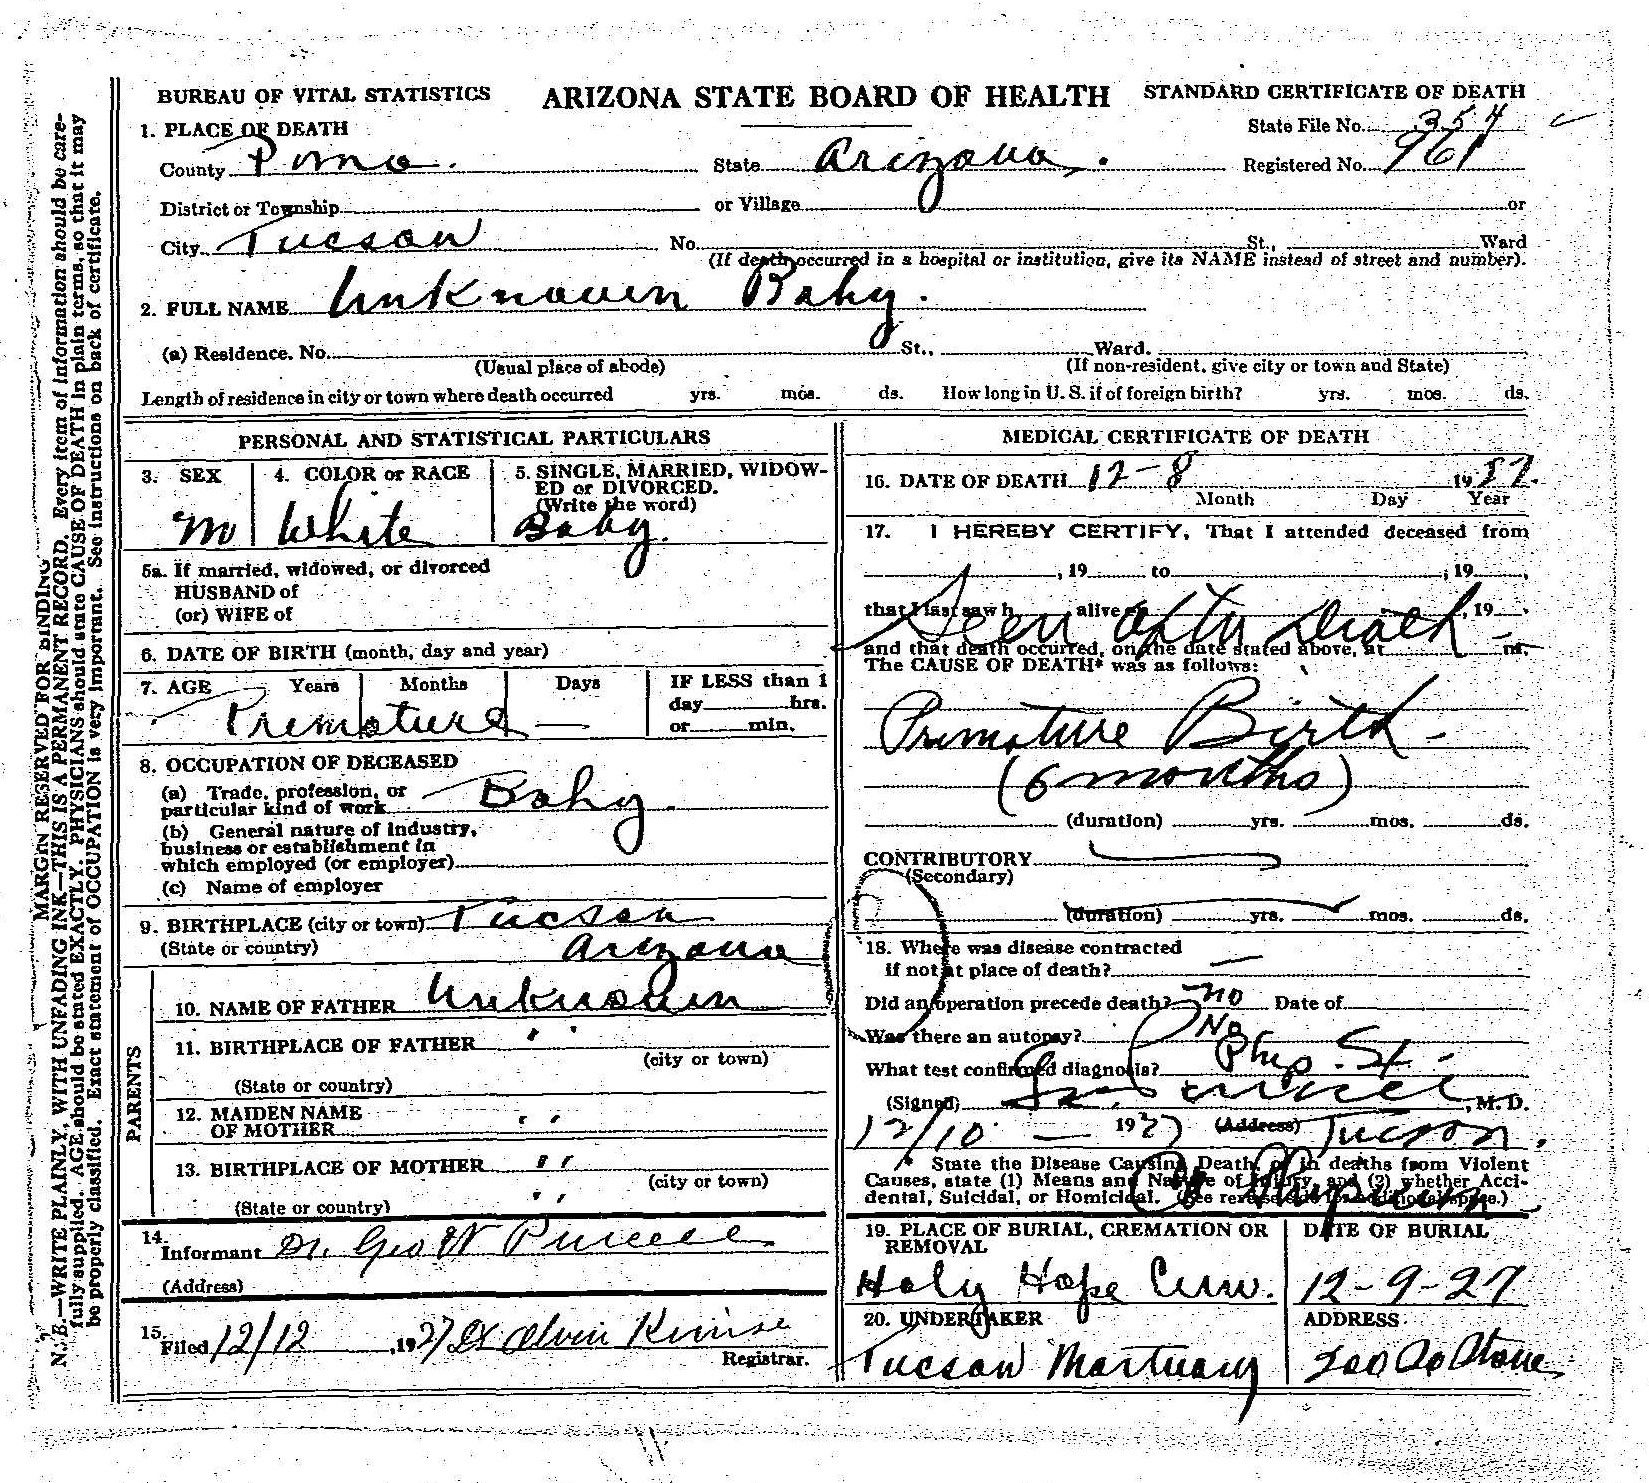 Tucson John Doe (1927) Death Certificate.jpeg